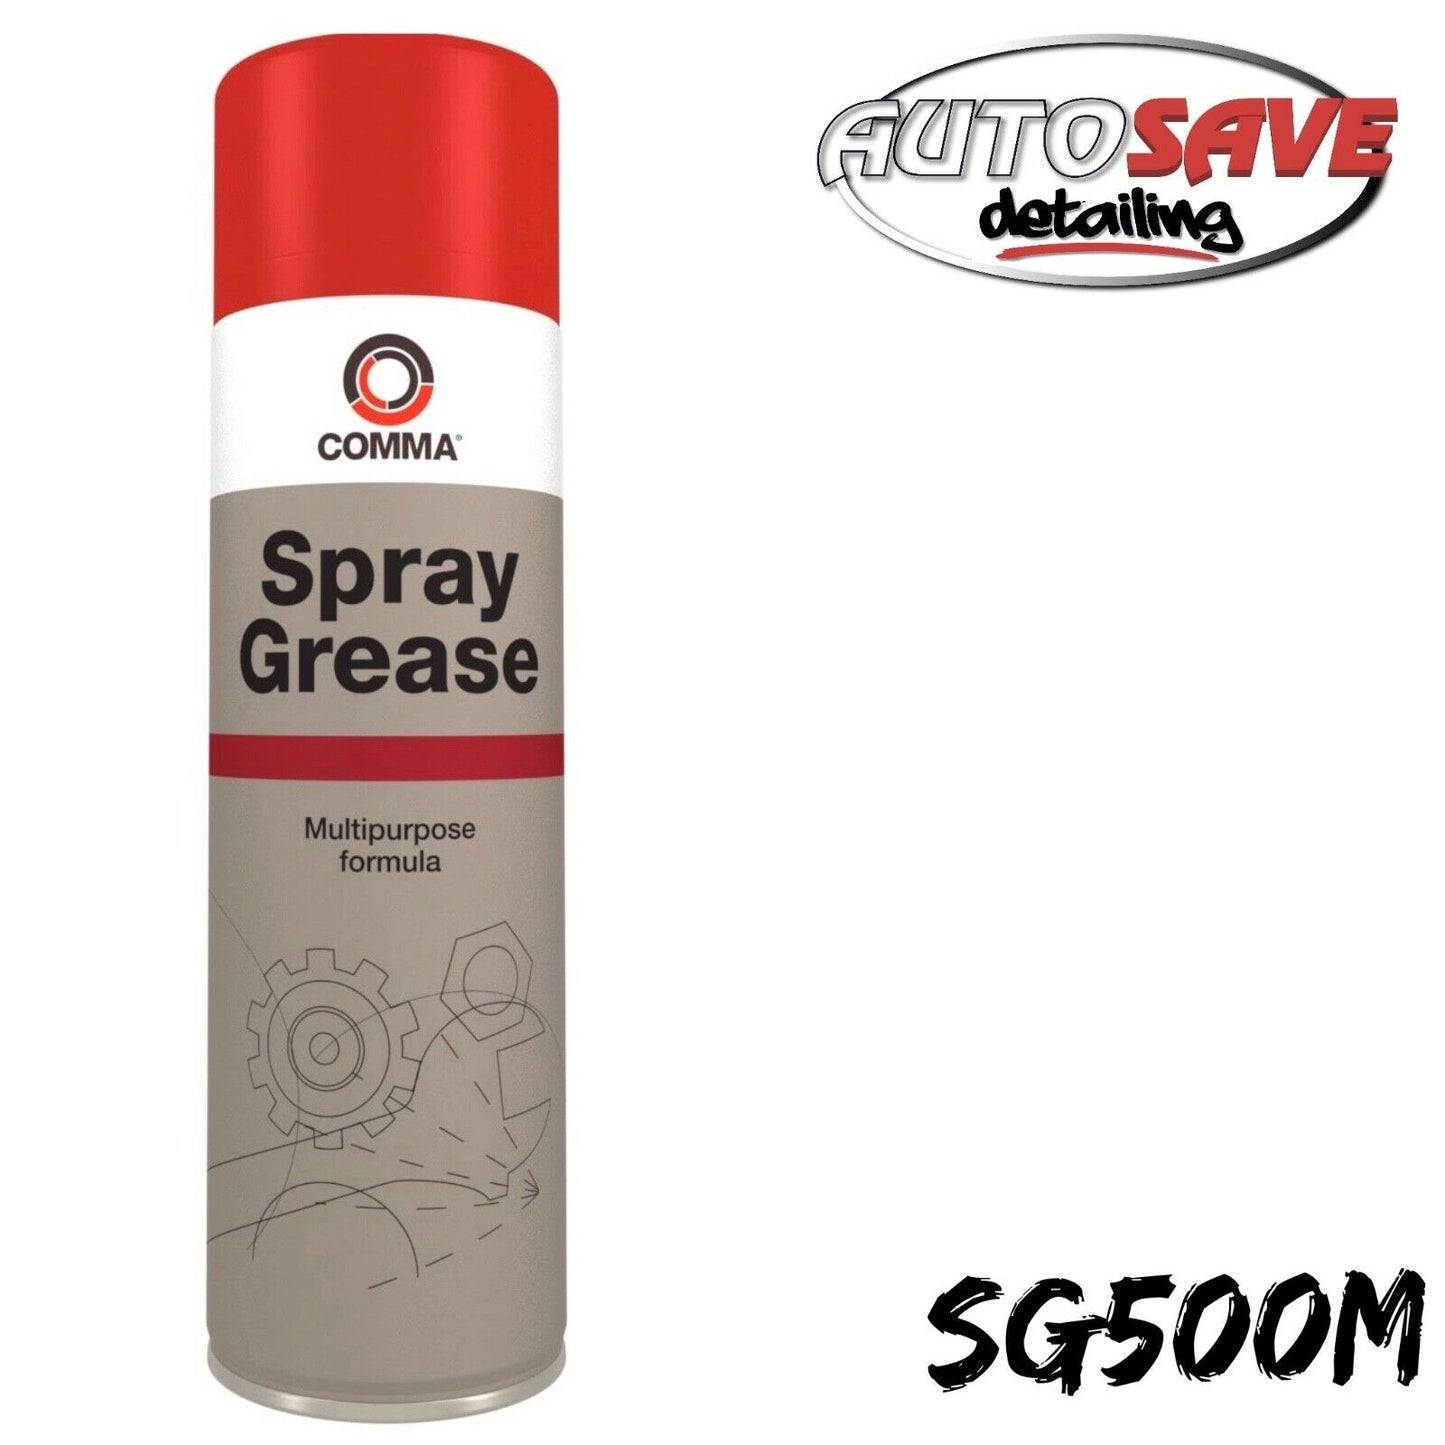 Comma Spray Grease 500ml SG500M